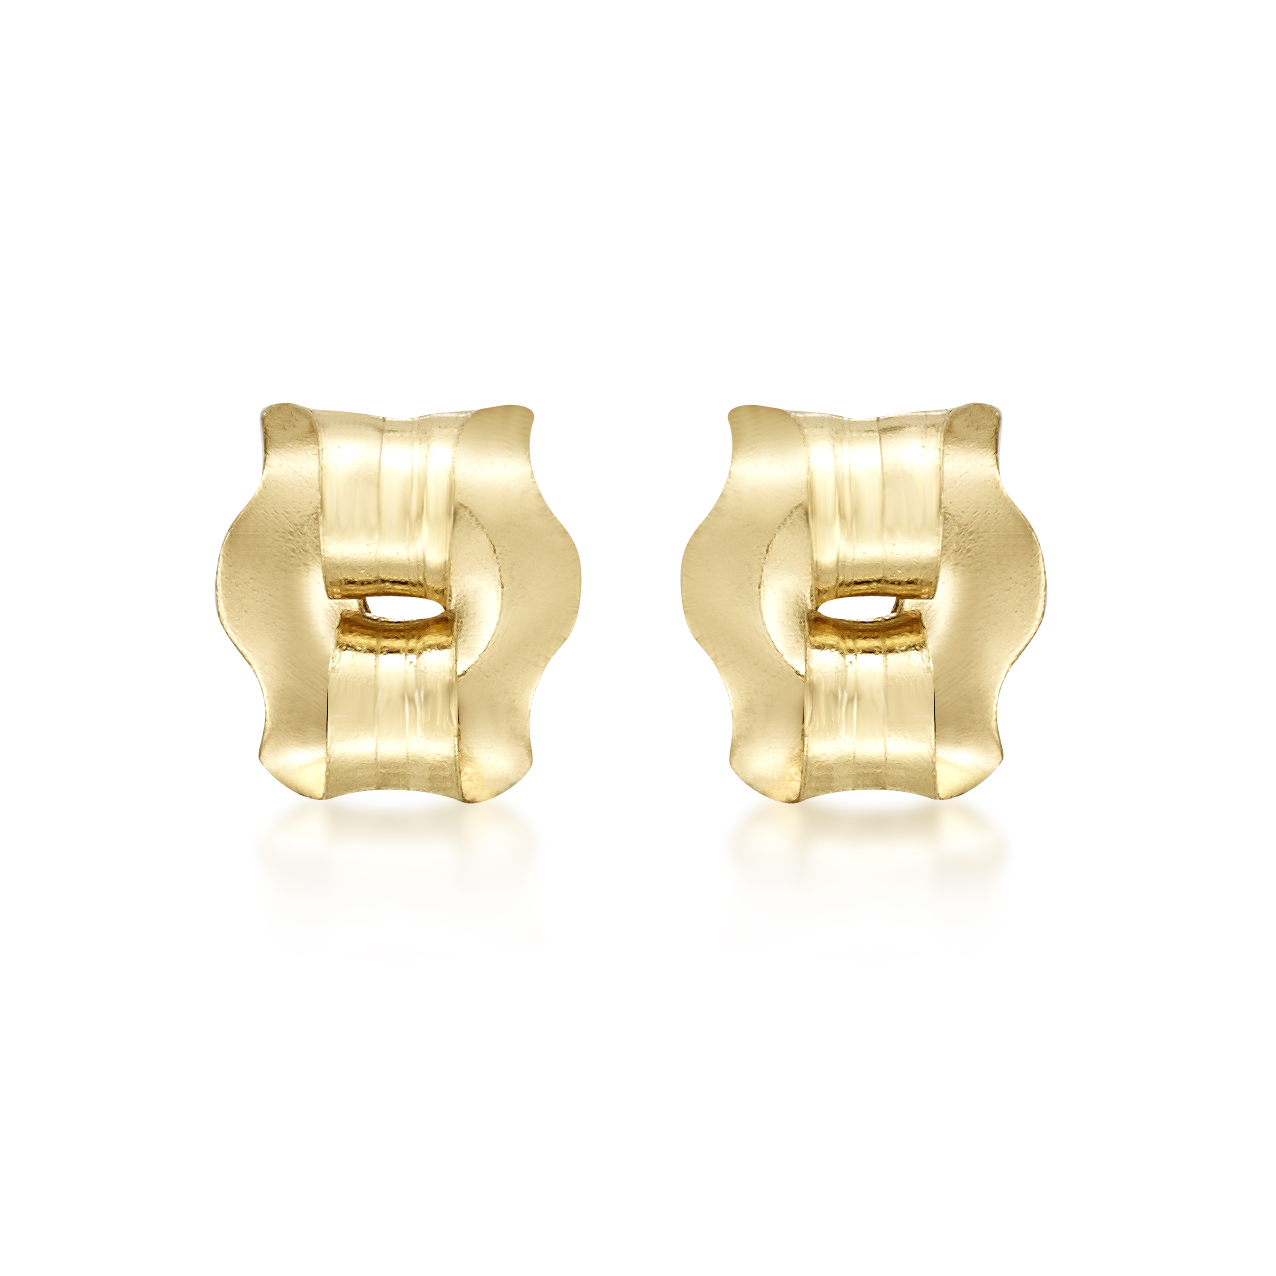 2 14K White Gold Earring Backs Friction Post Jewelry